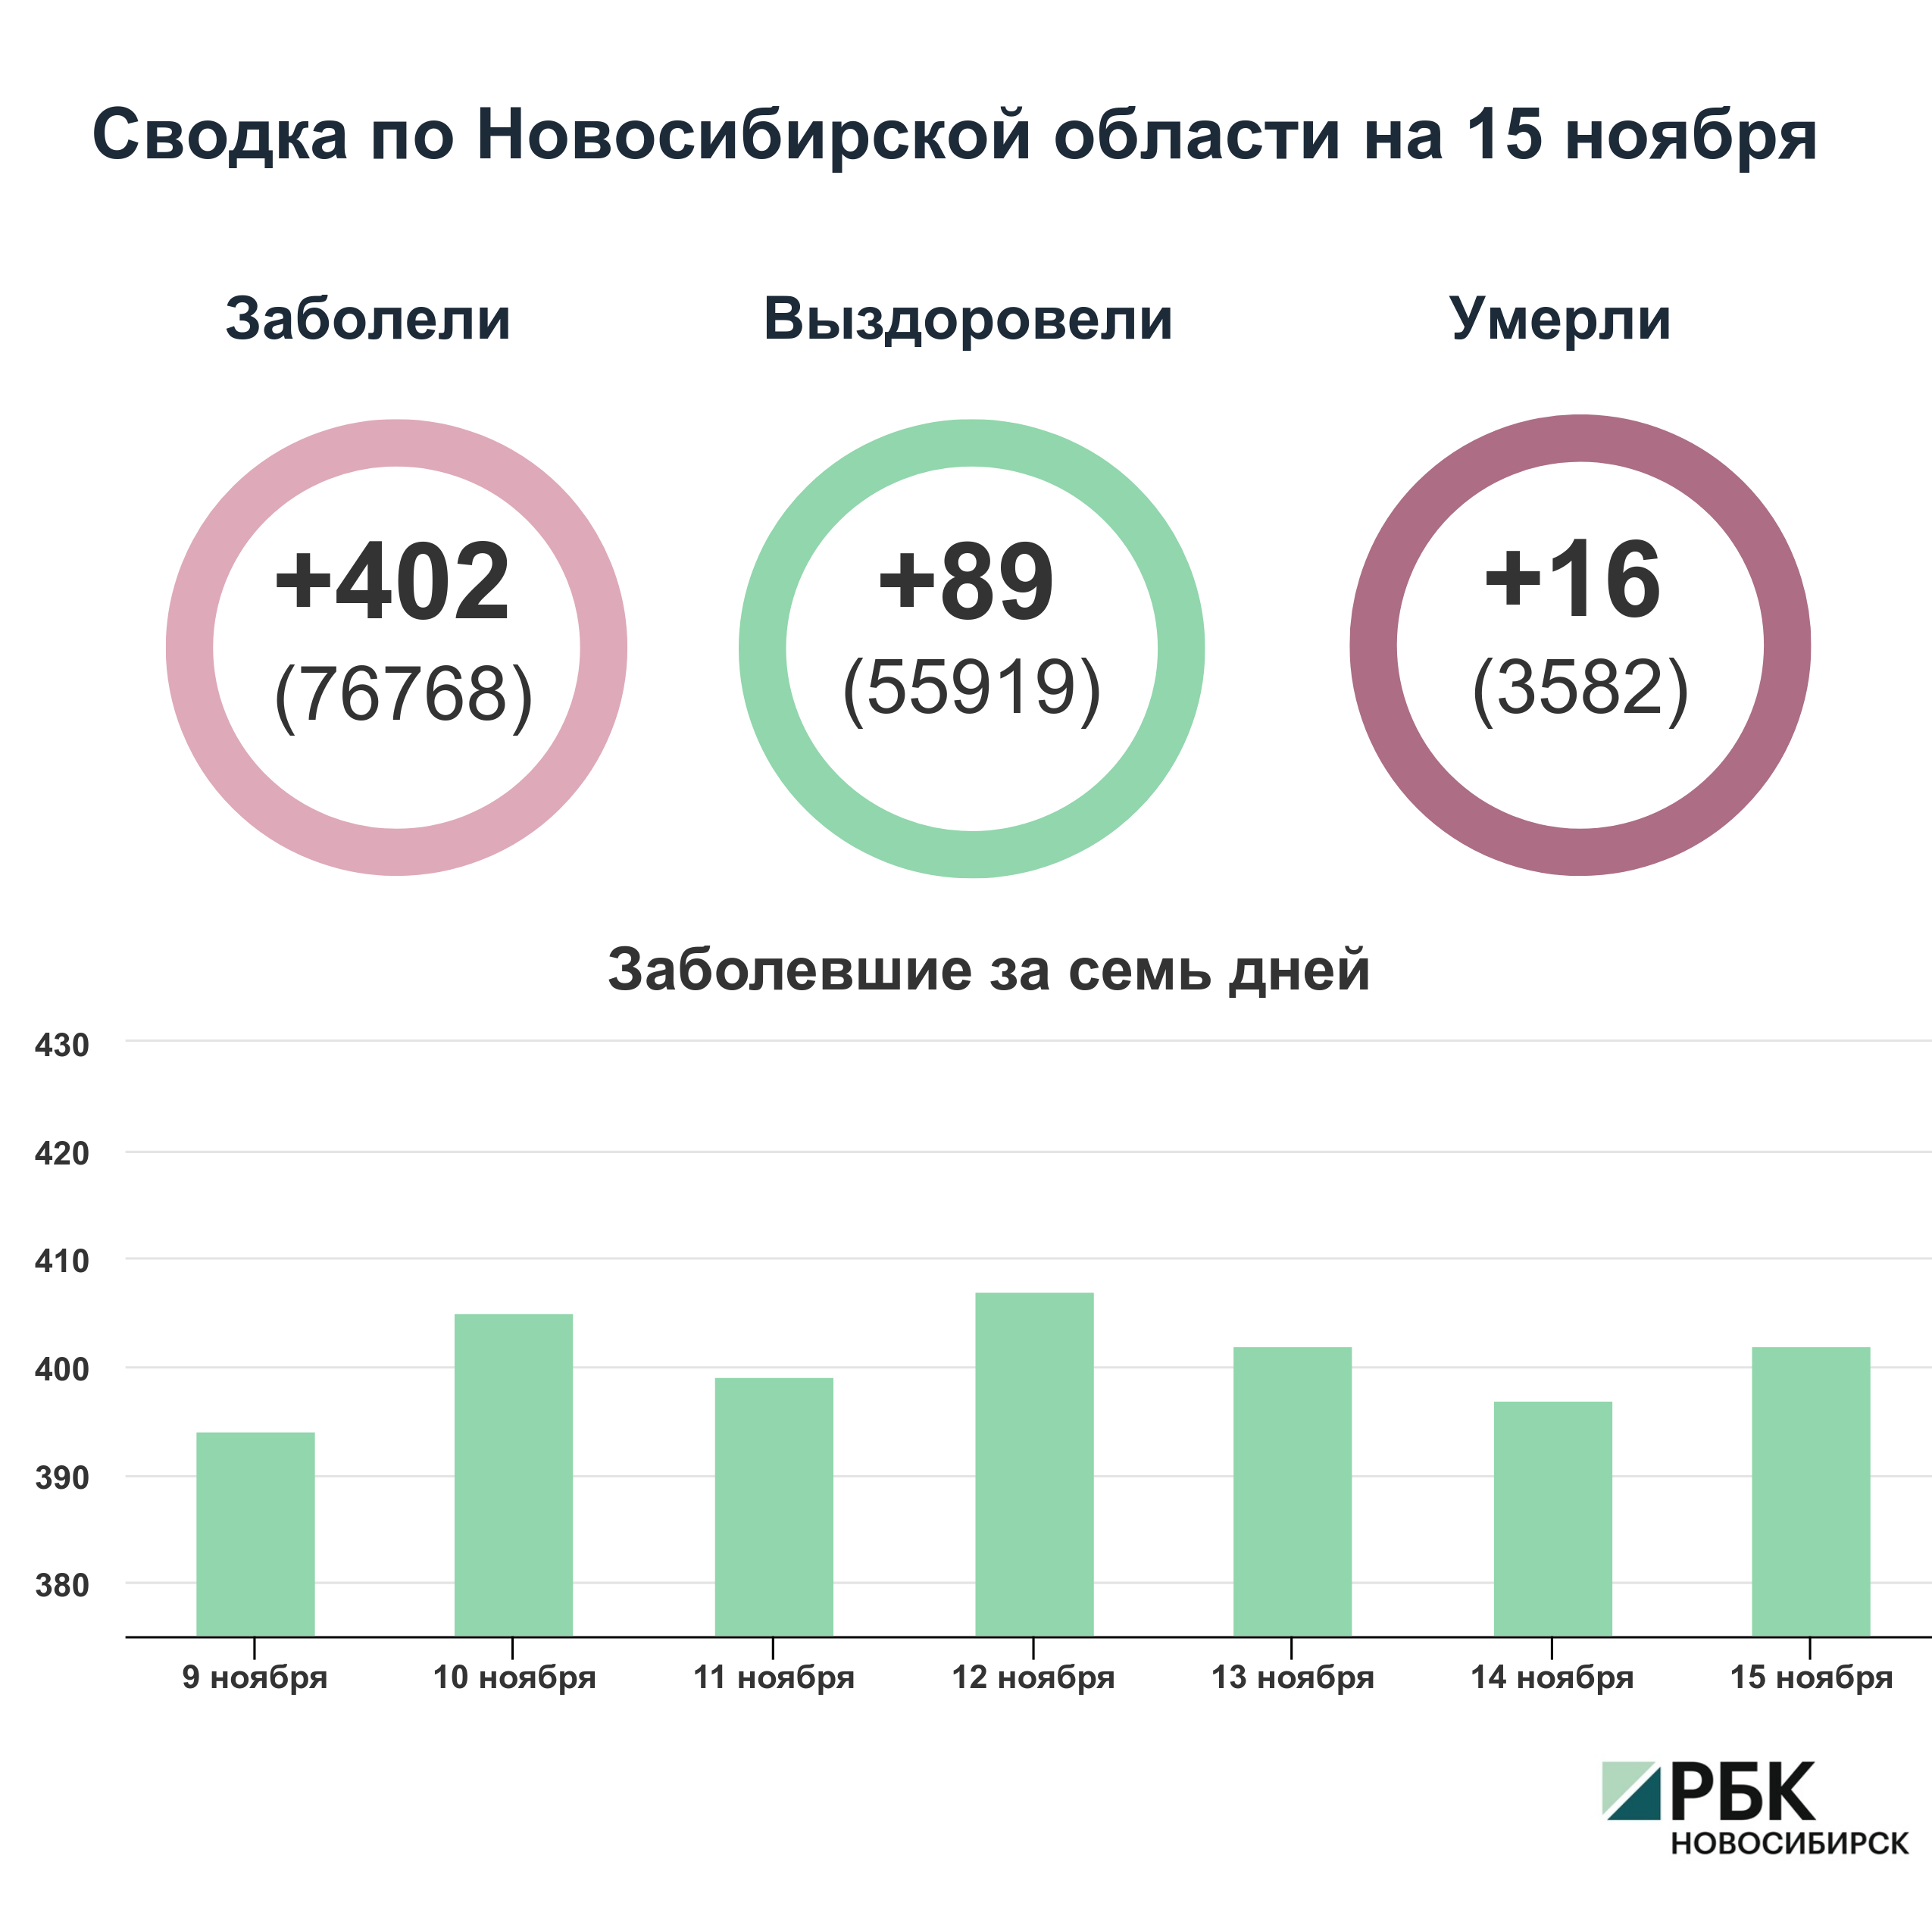 Коронавирус в Новосибирске: сводка на 15 ноября